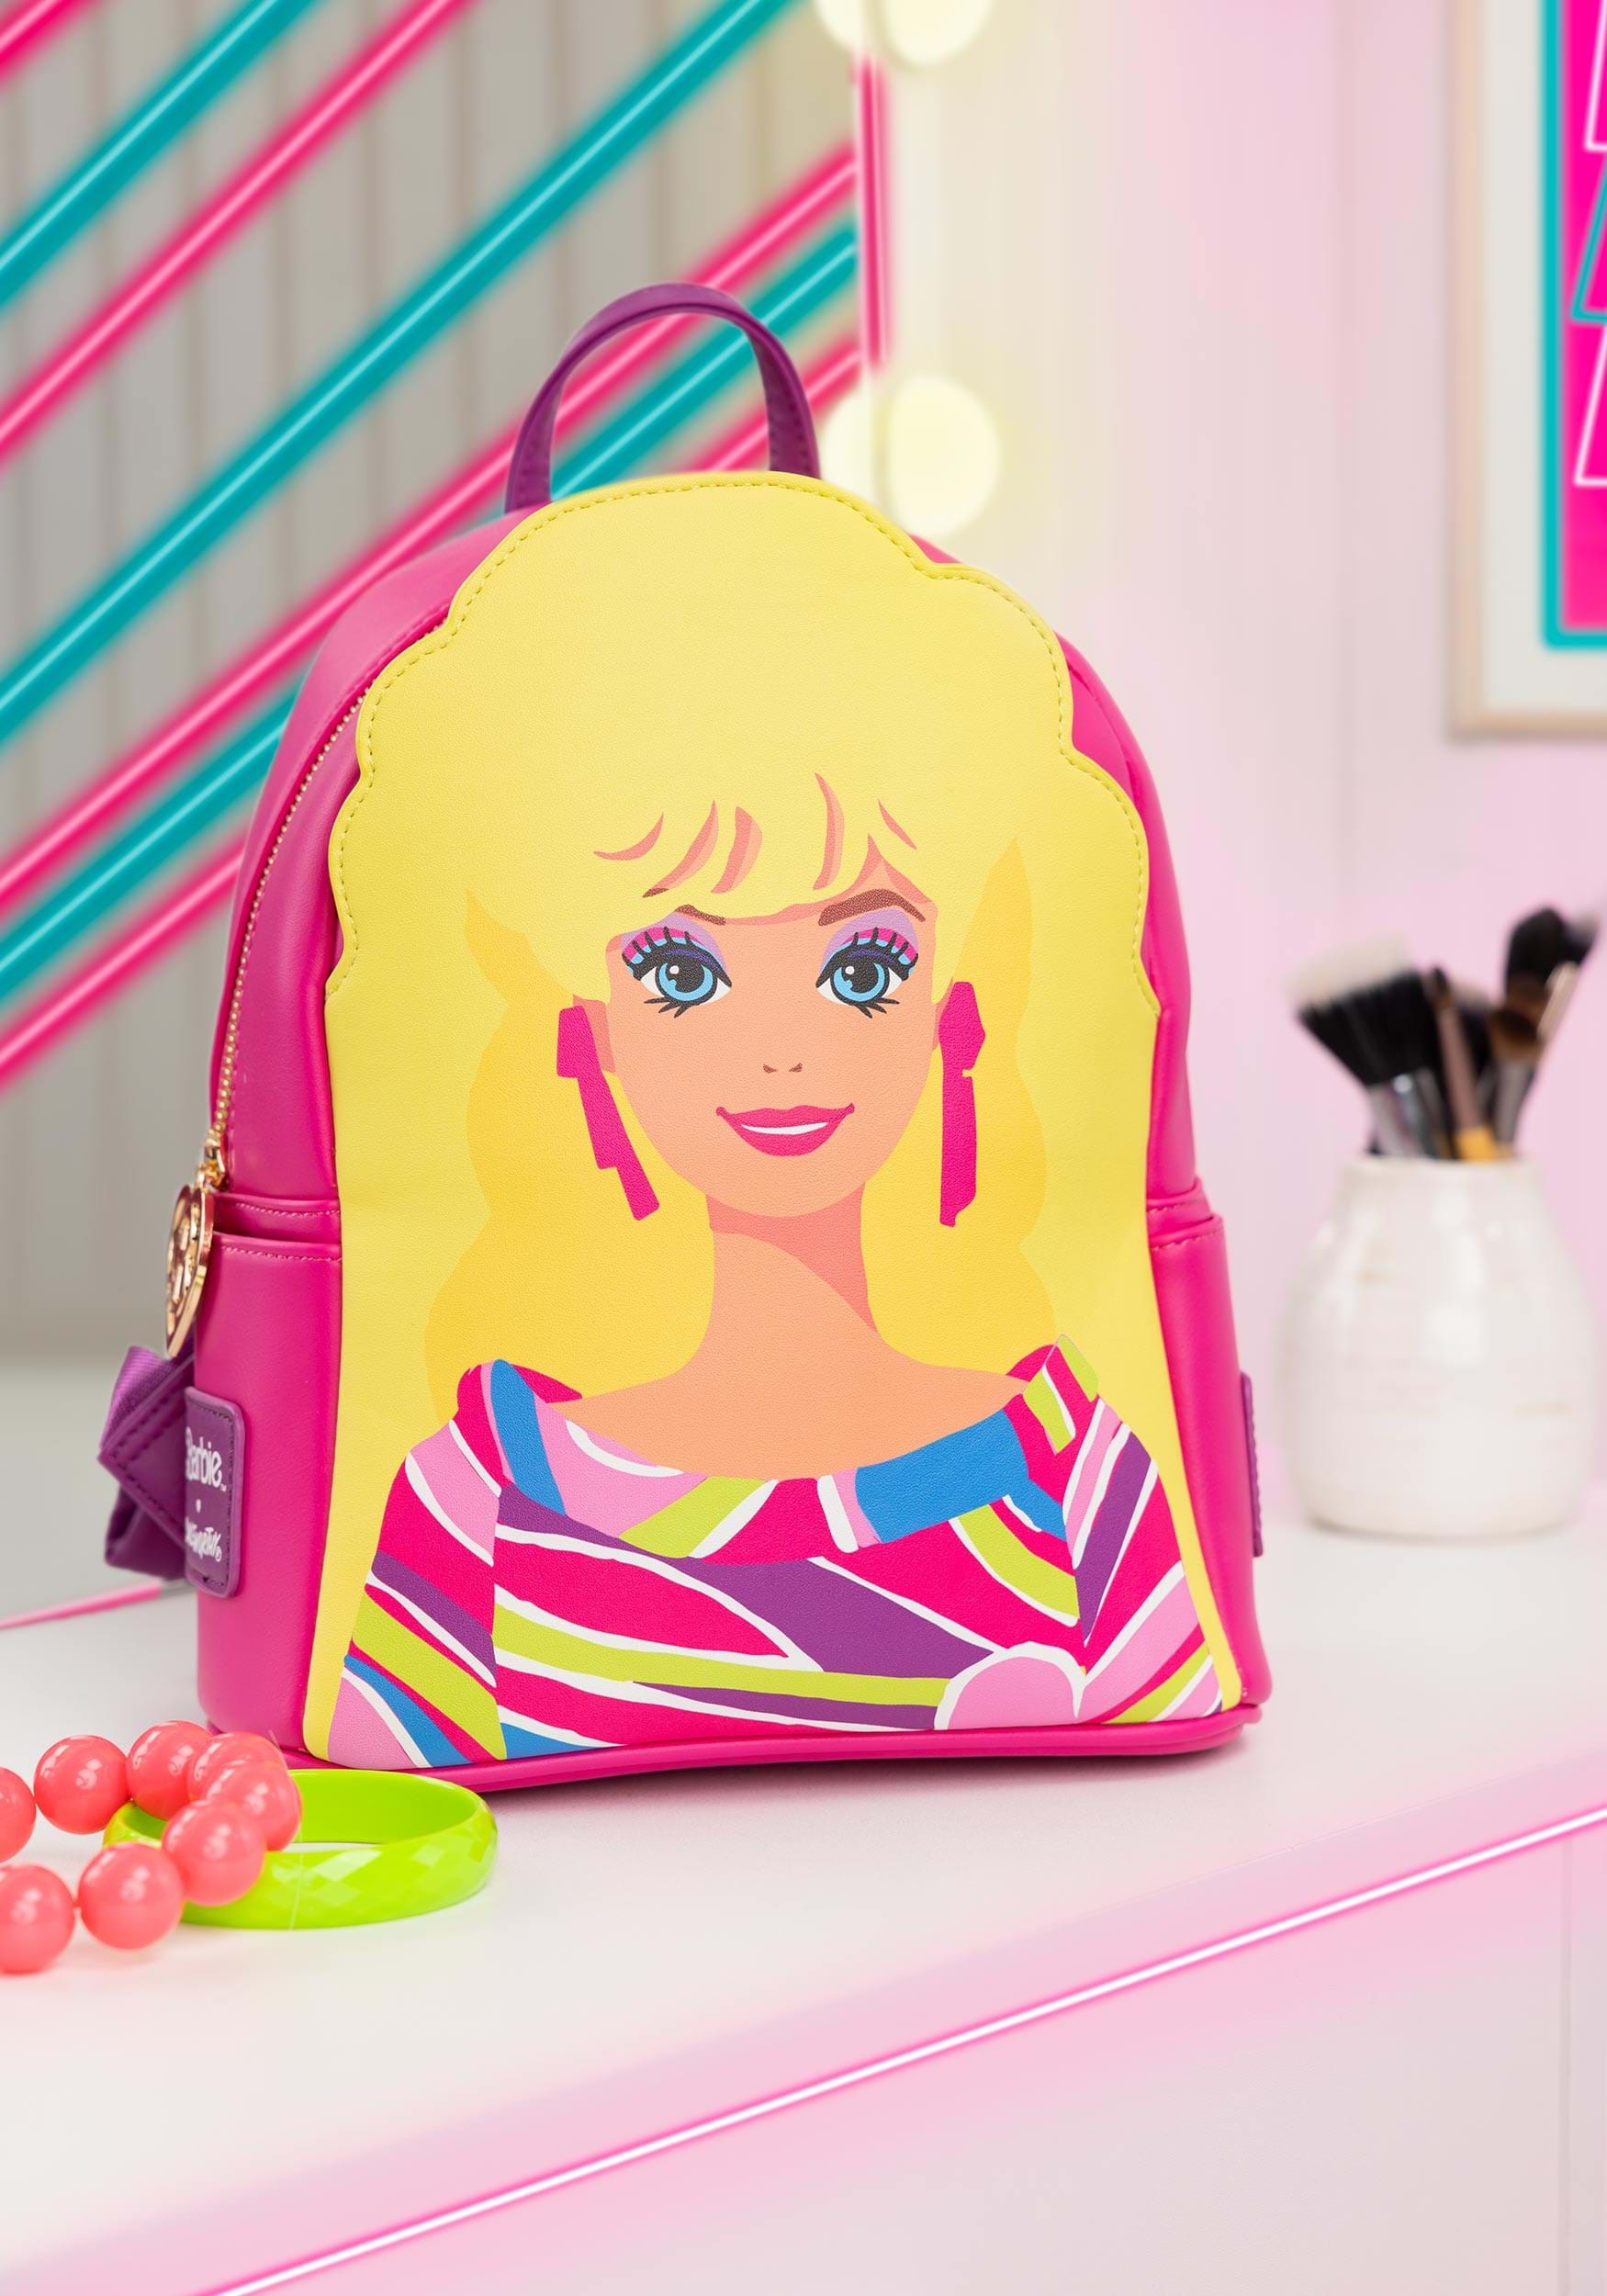 Totally Hair Barbie Blonde Mini Backpack by Cakeworthy